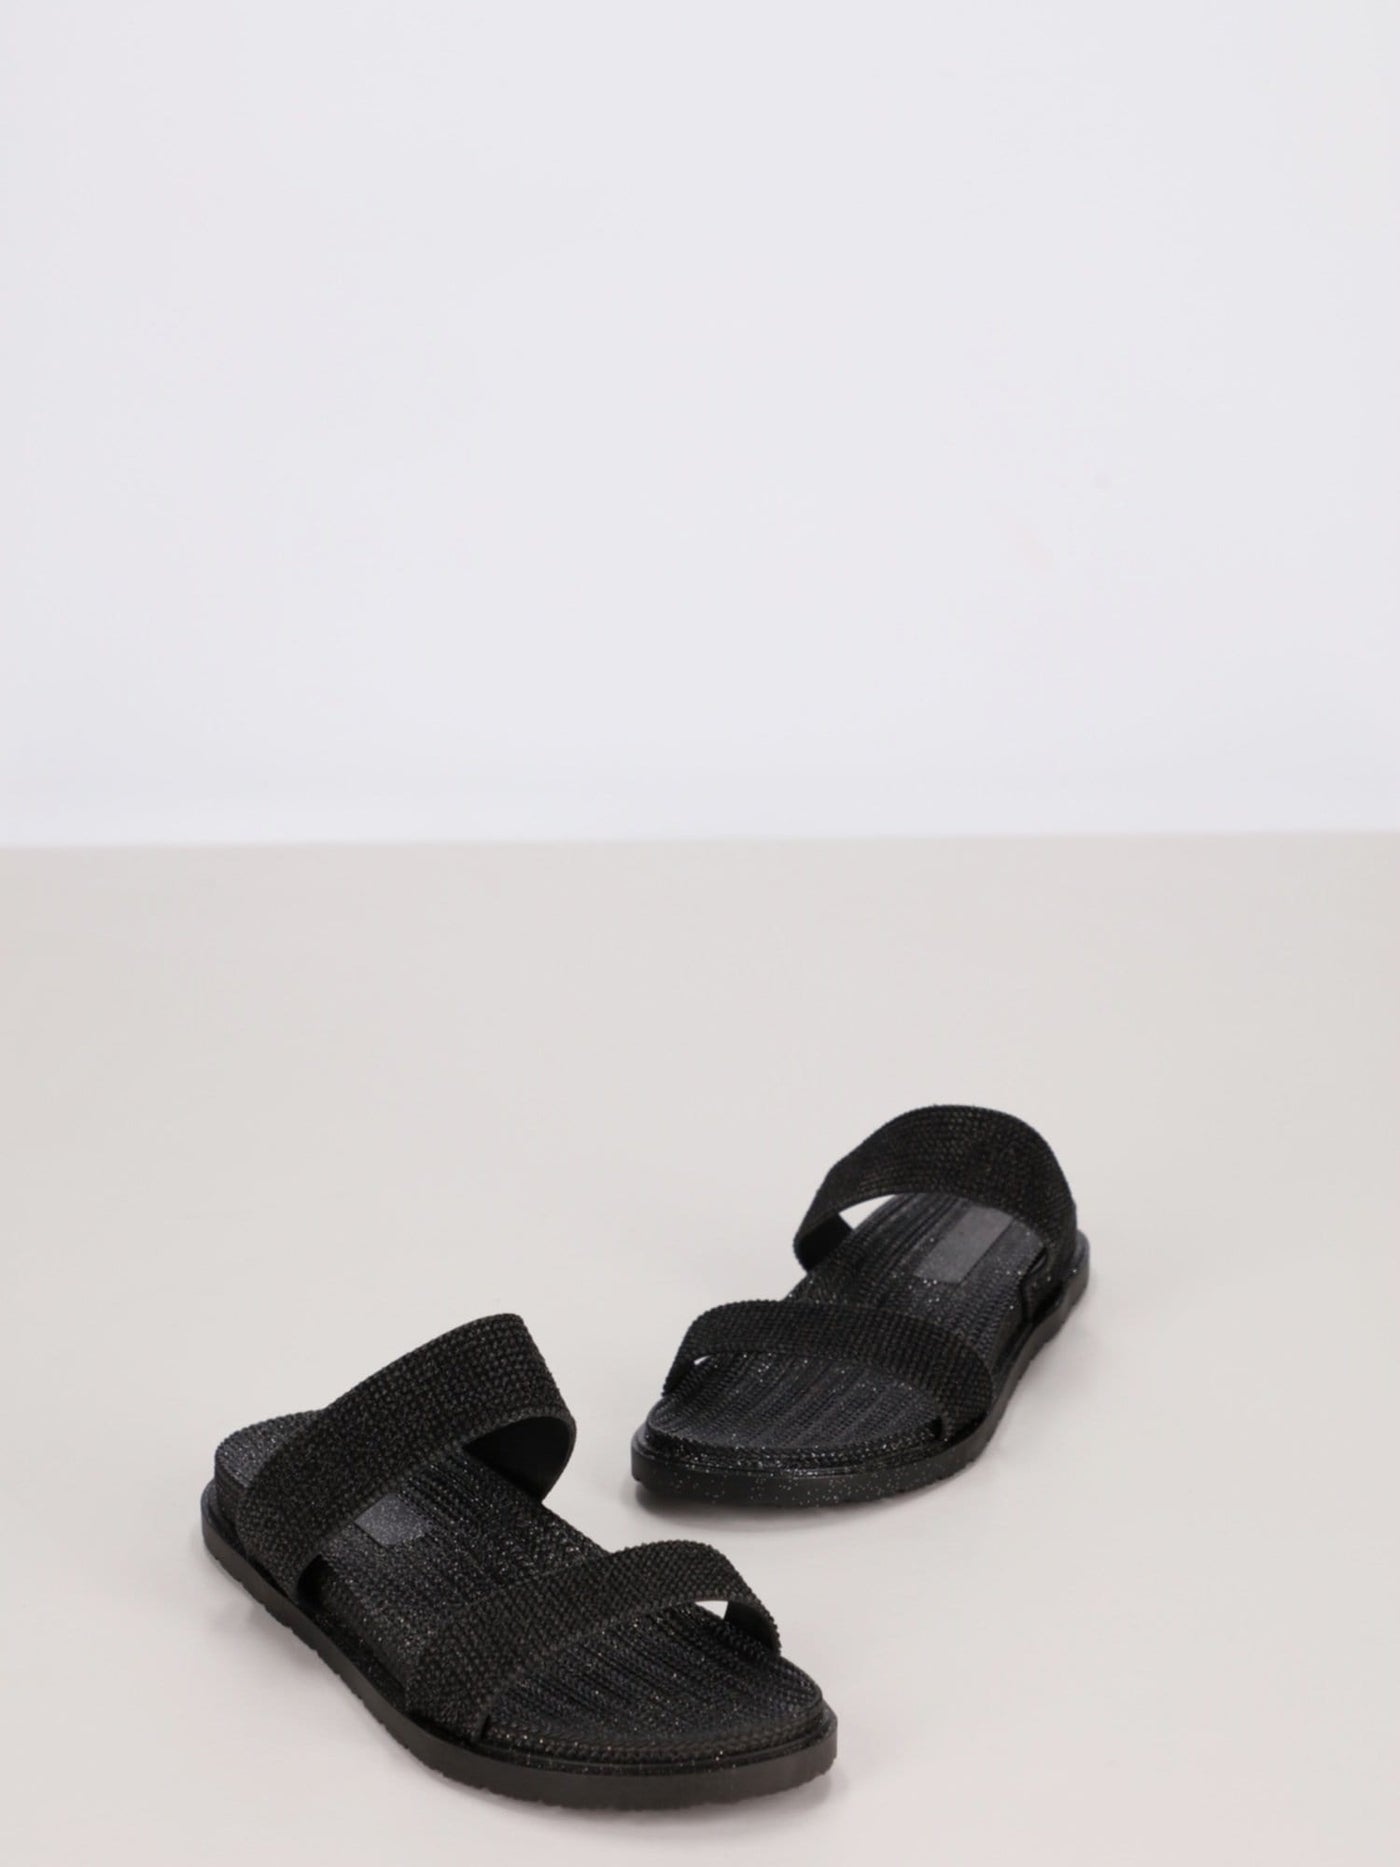 OR Sandals & Flipflops Slip On Flat Sandals